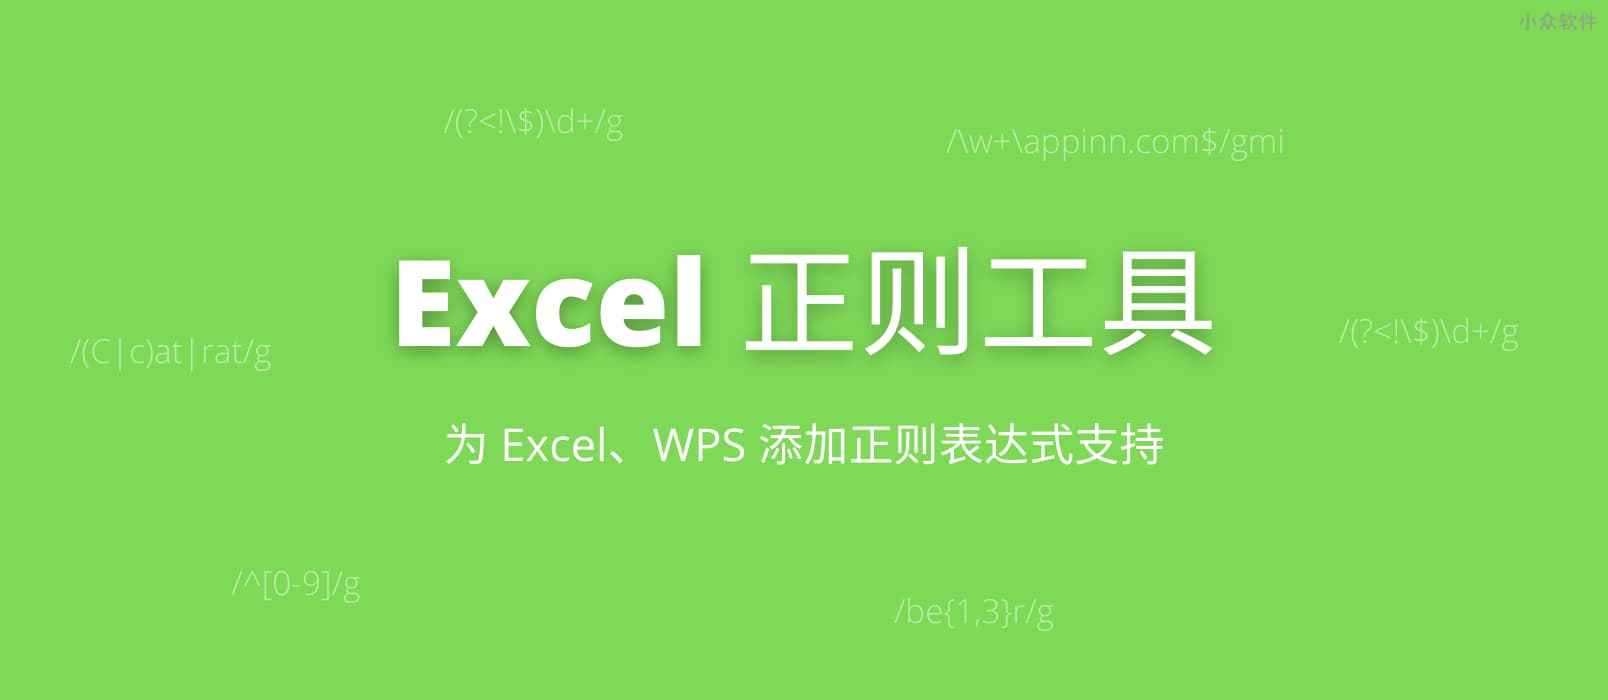 Excel正则工具 – 为 Excel、WPS  添加正则表达式支持[Windows]